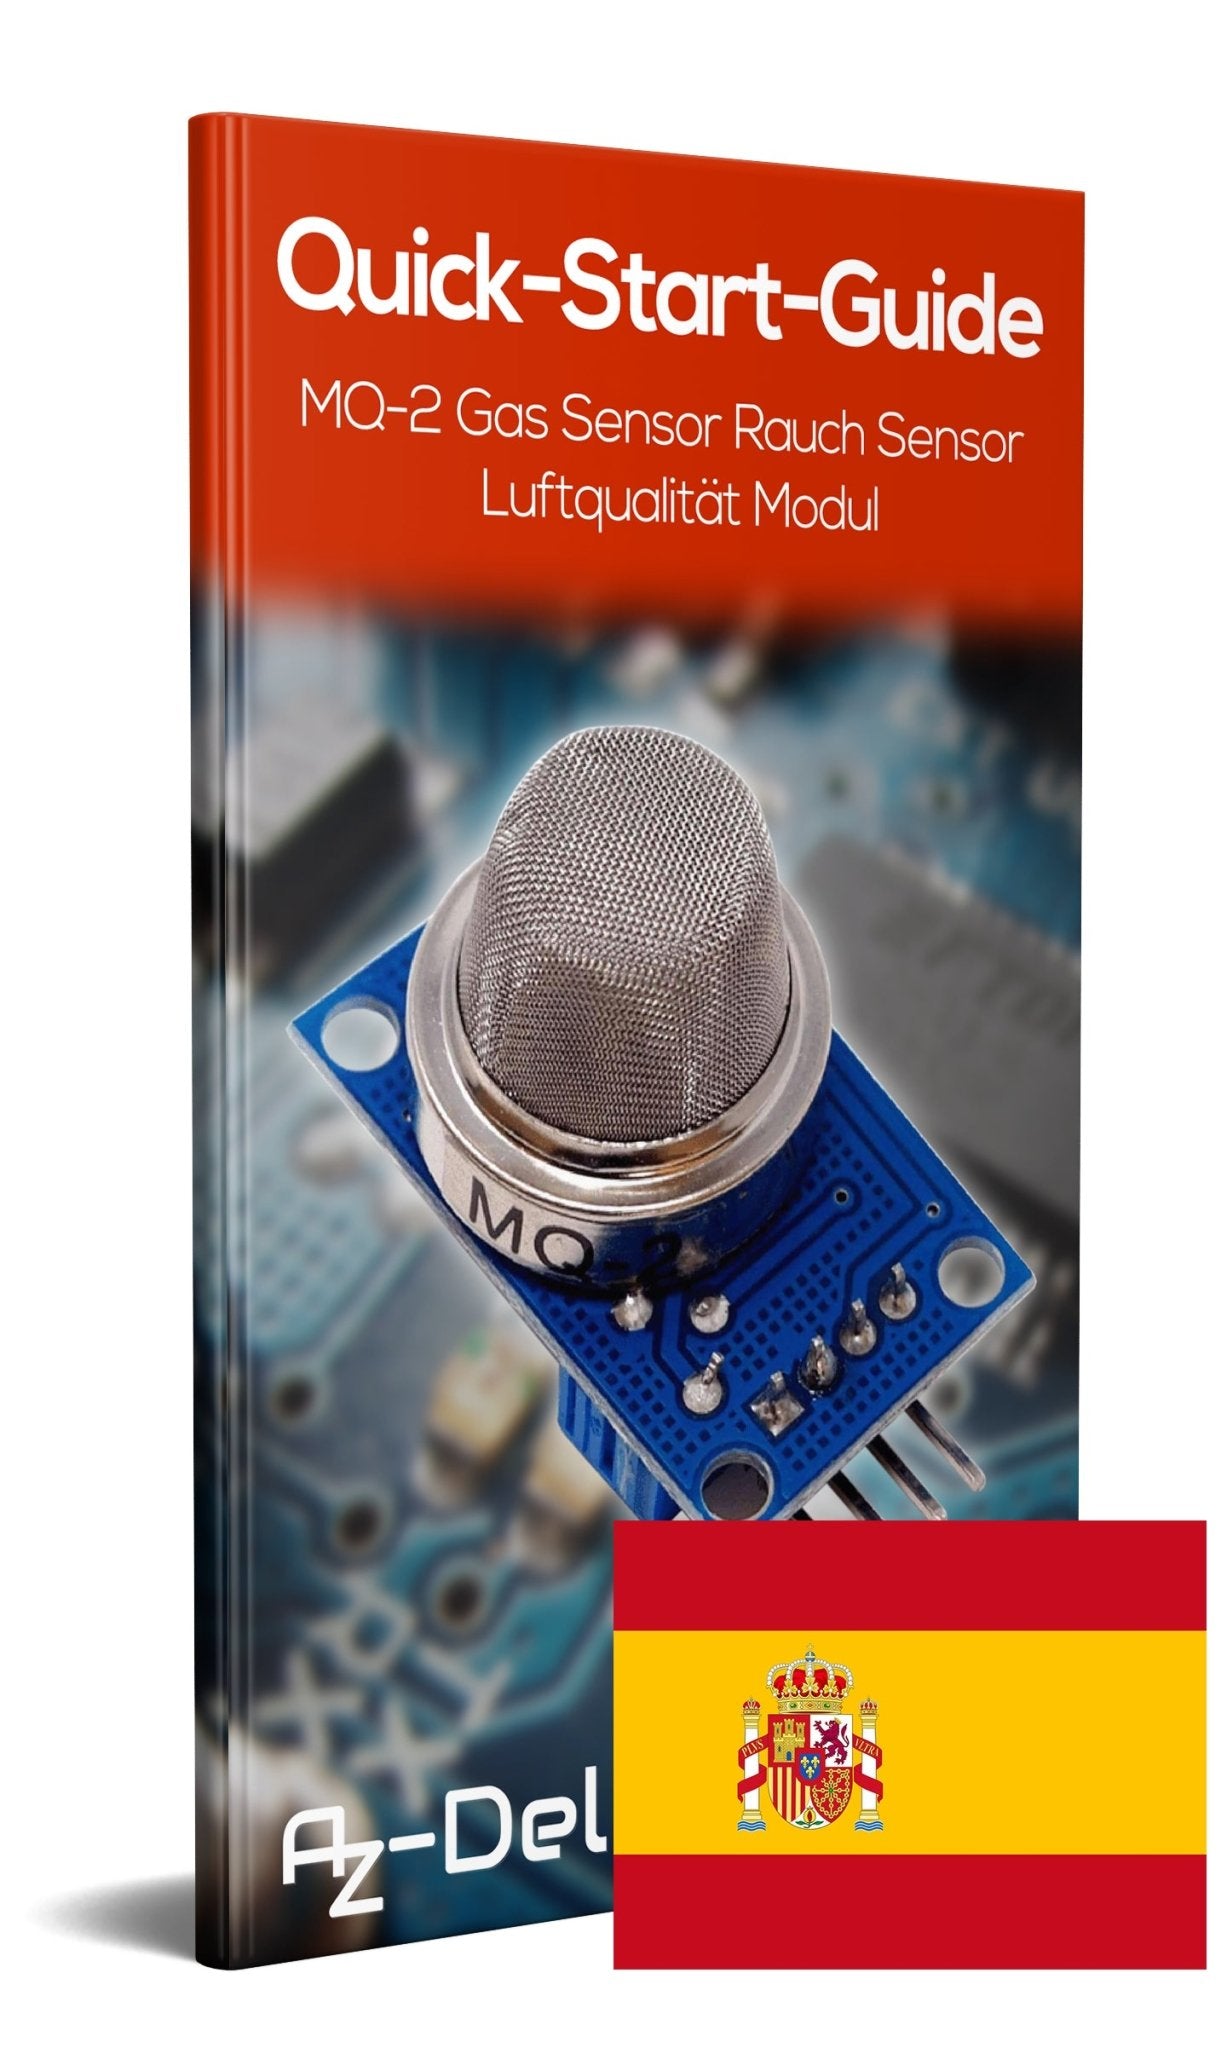 MQ-2 Gas Sensor Rauch Sensor Luftqualität Modul - AZ-Delivery